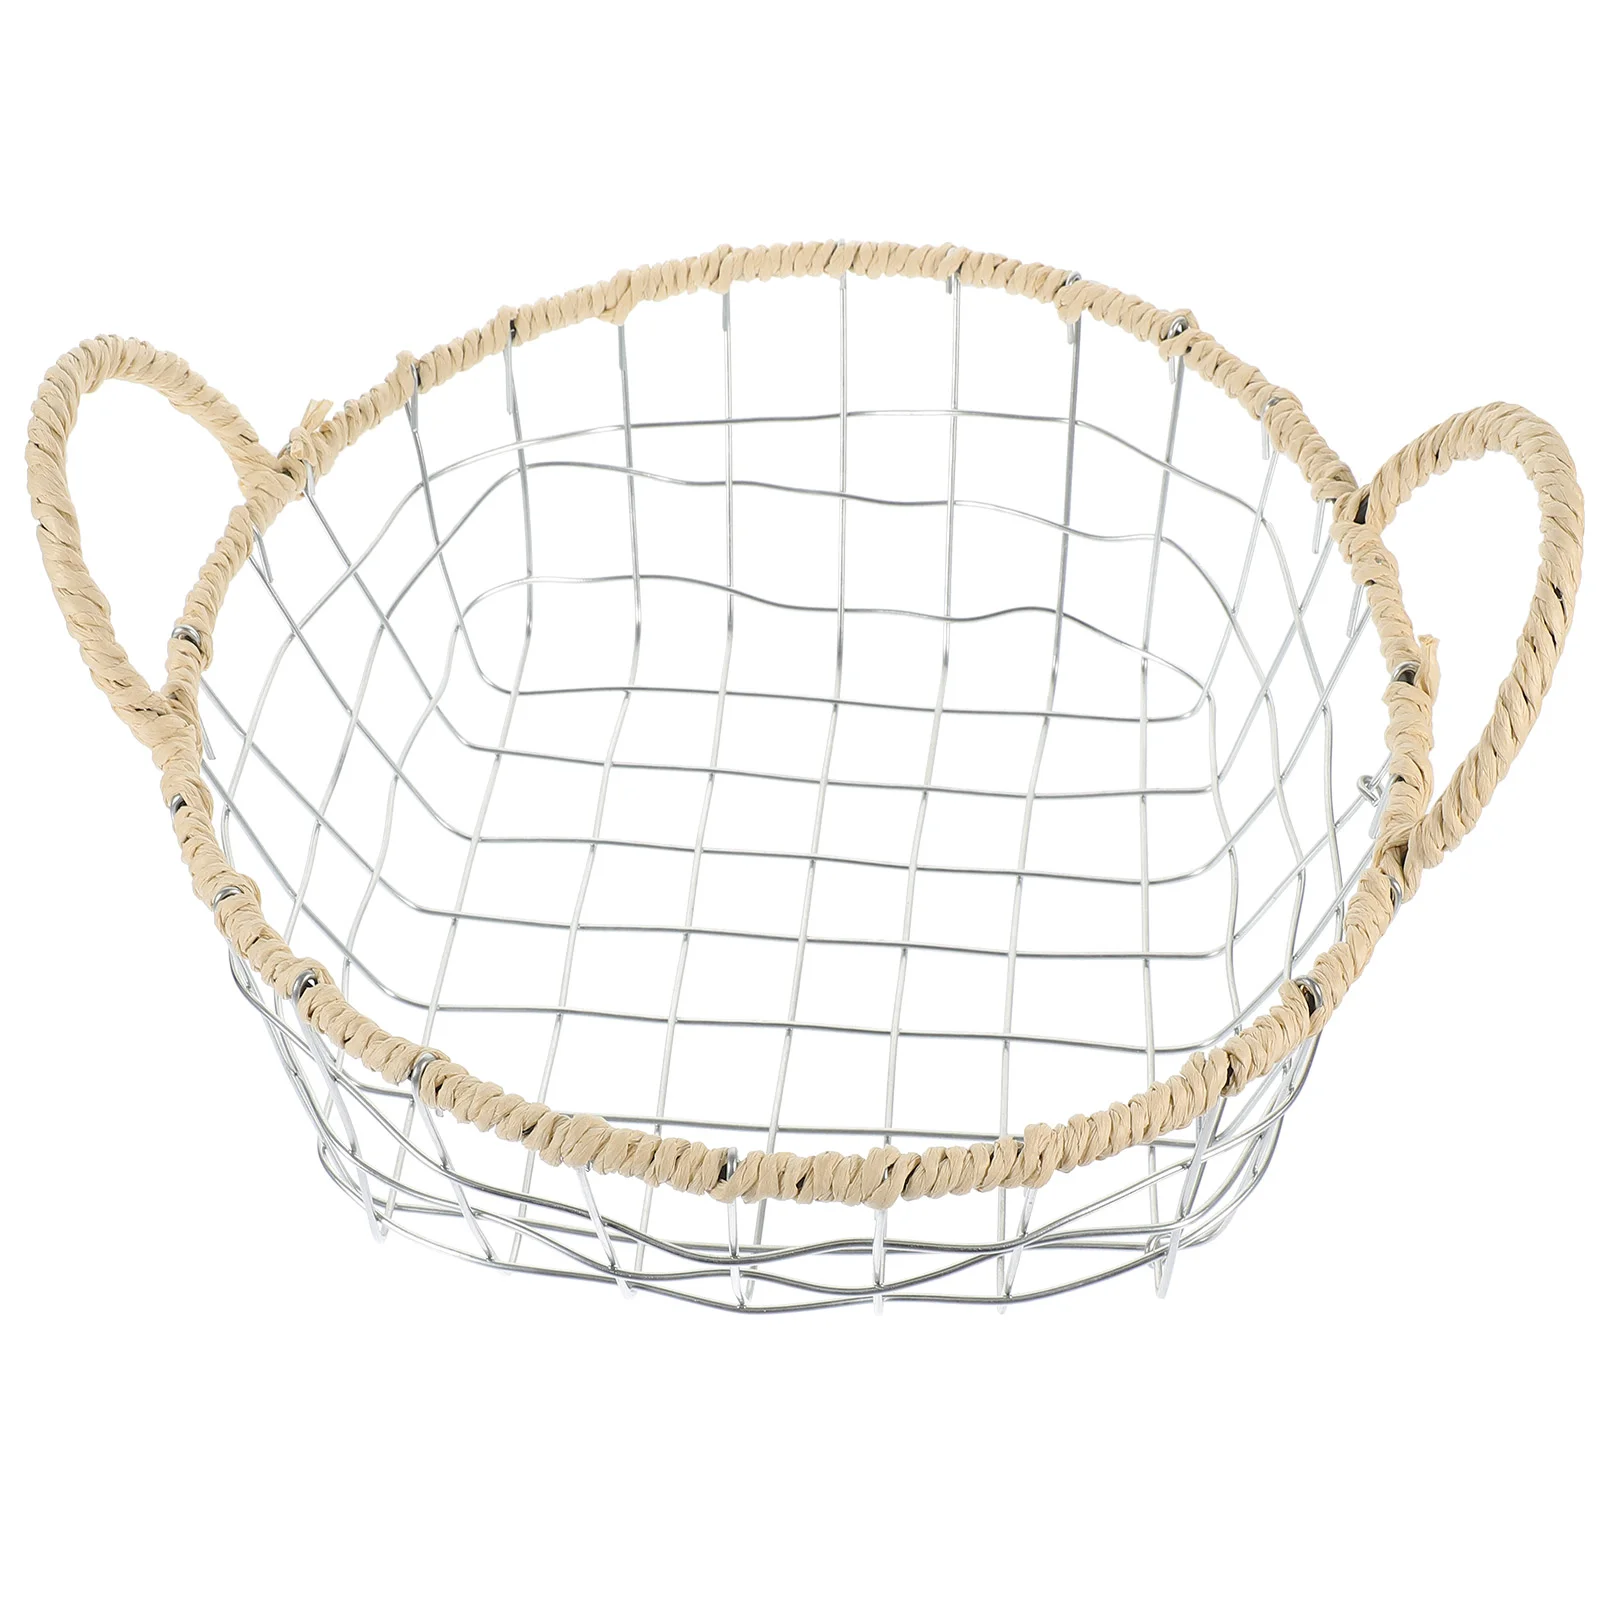 

Storage Basket Home Accents Decor Fruit And Vegetable Décor Wire Wrought Iron Baskets Decorative Kitchen Decir